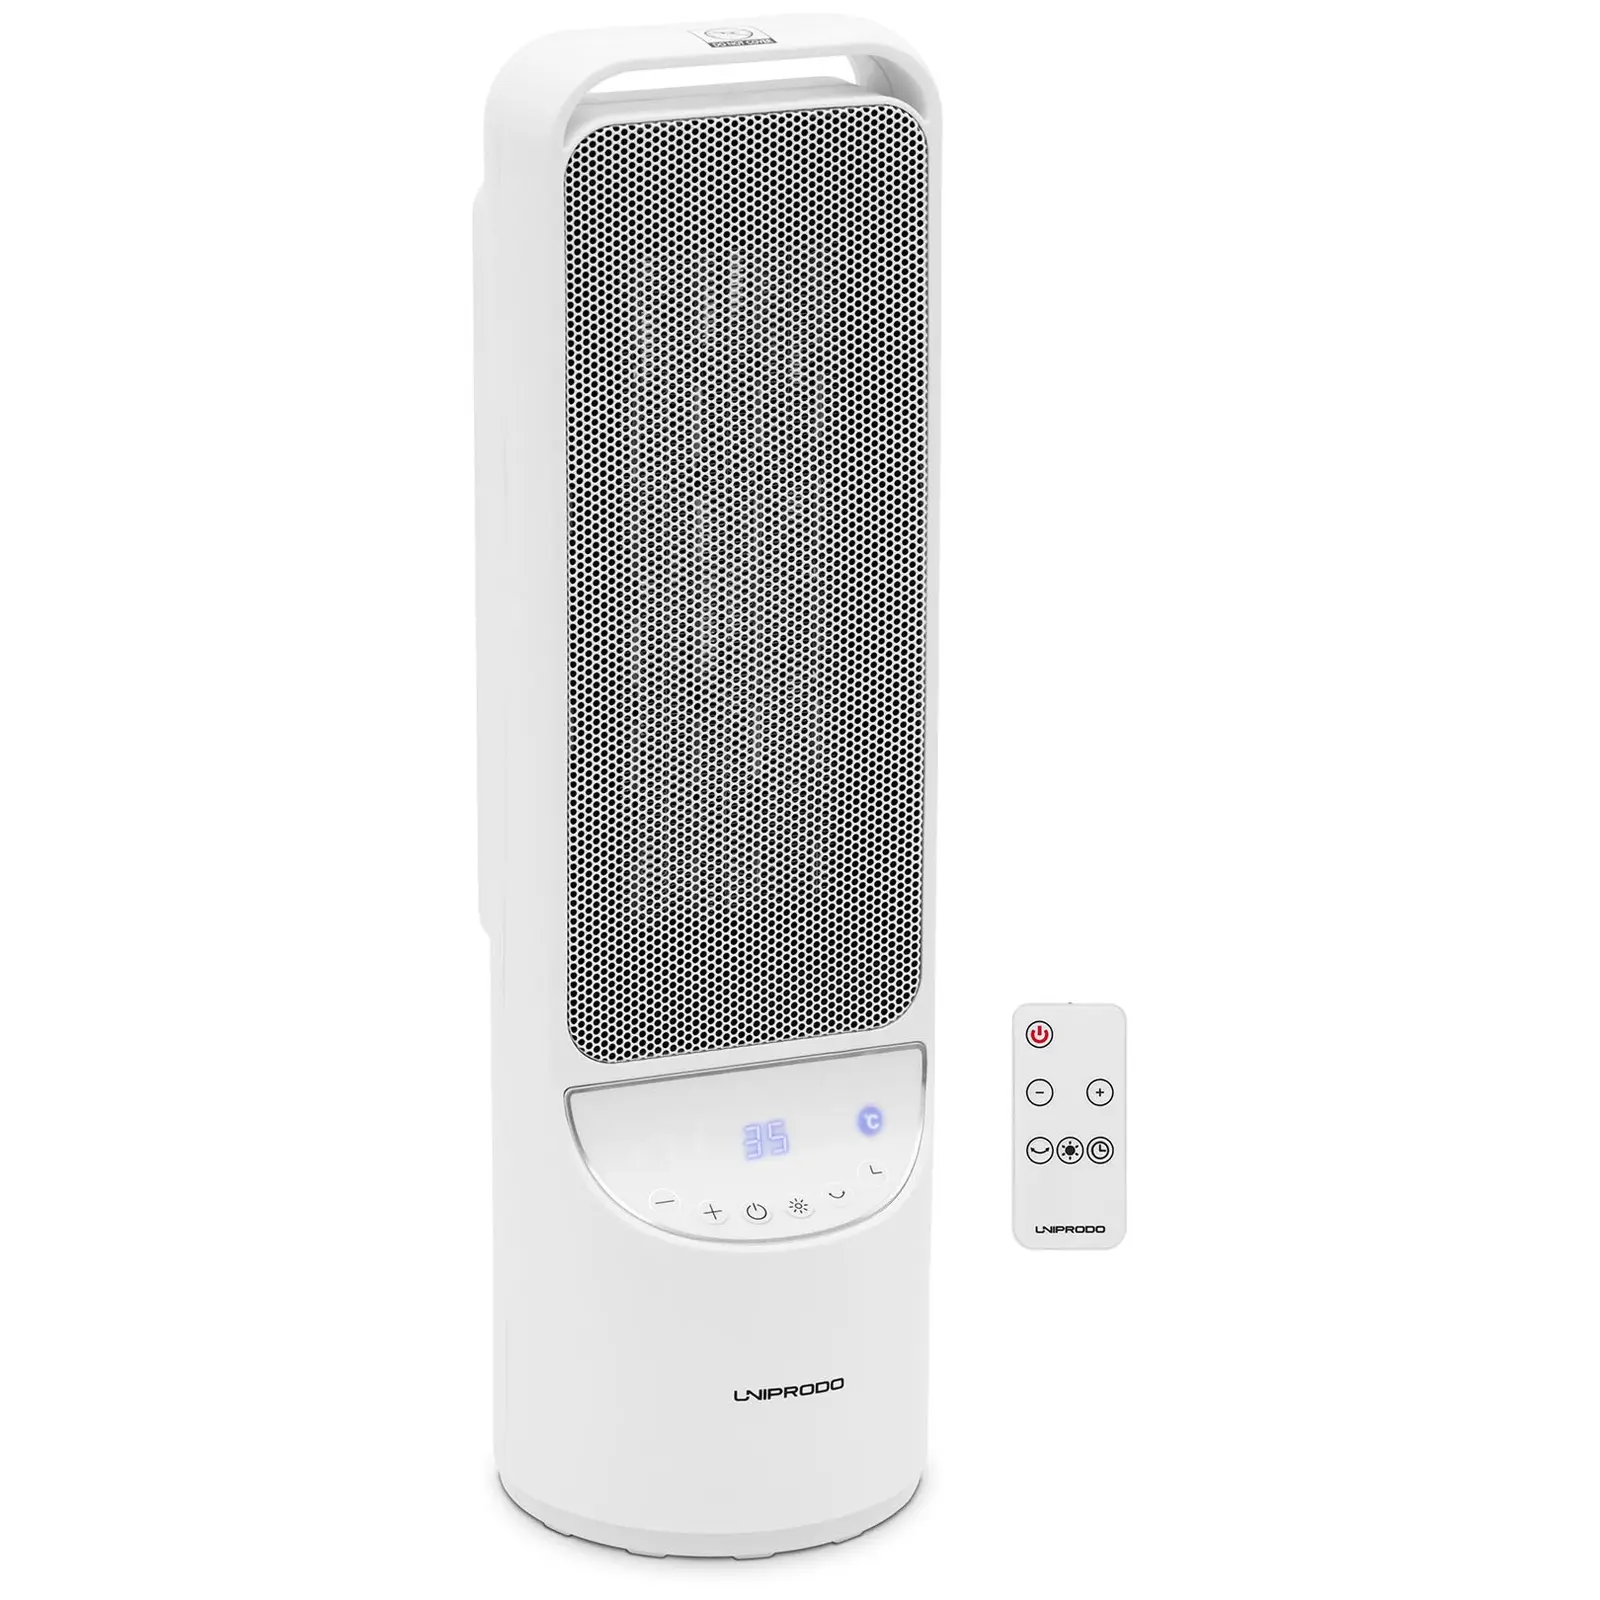 Electric heater - 1200/2000 W - swivel - white